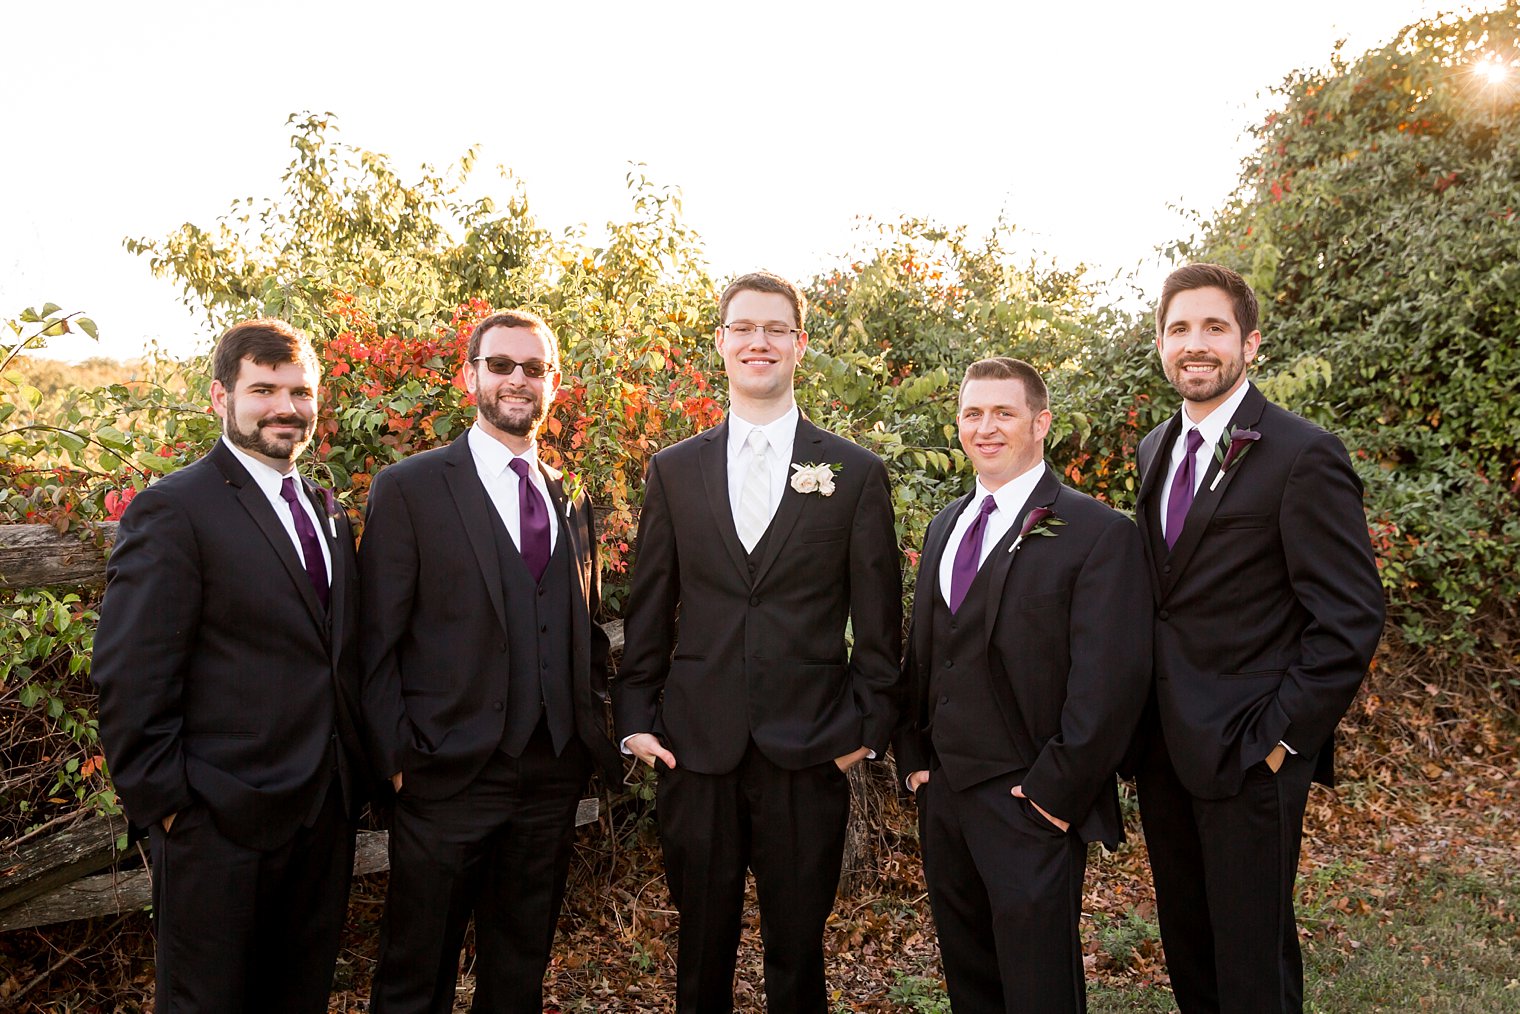 Basking Ridge Country Club groomsmen photo